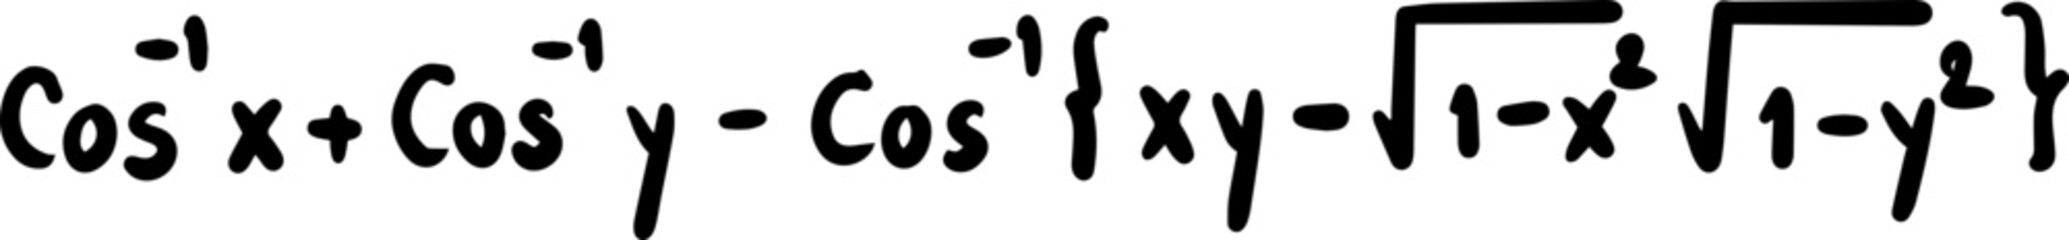 inverse trigonometric functions handwritten